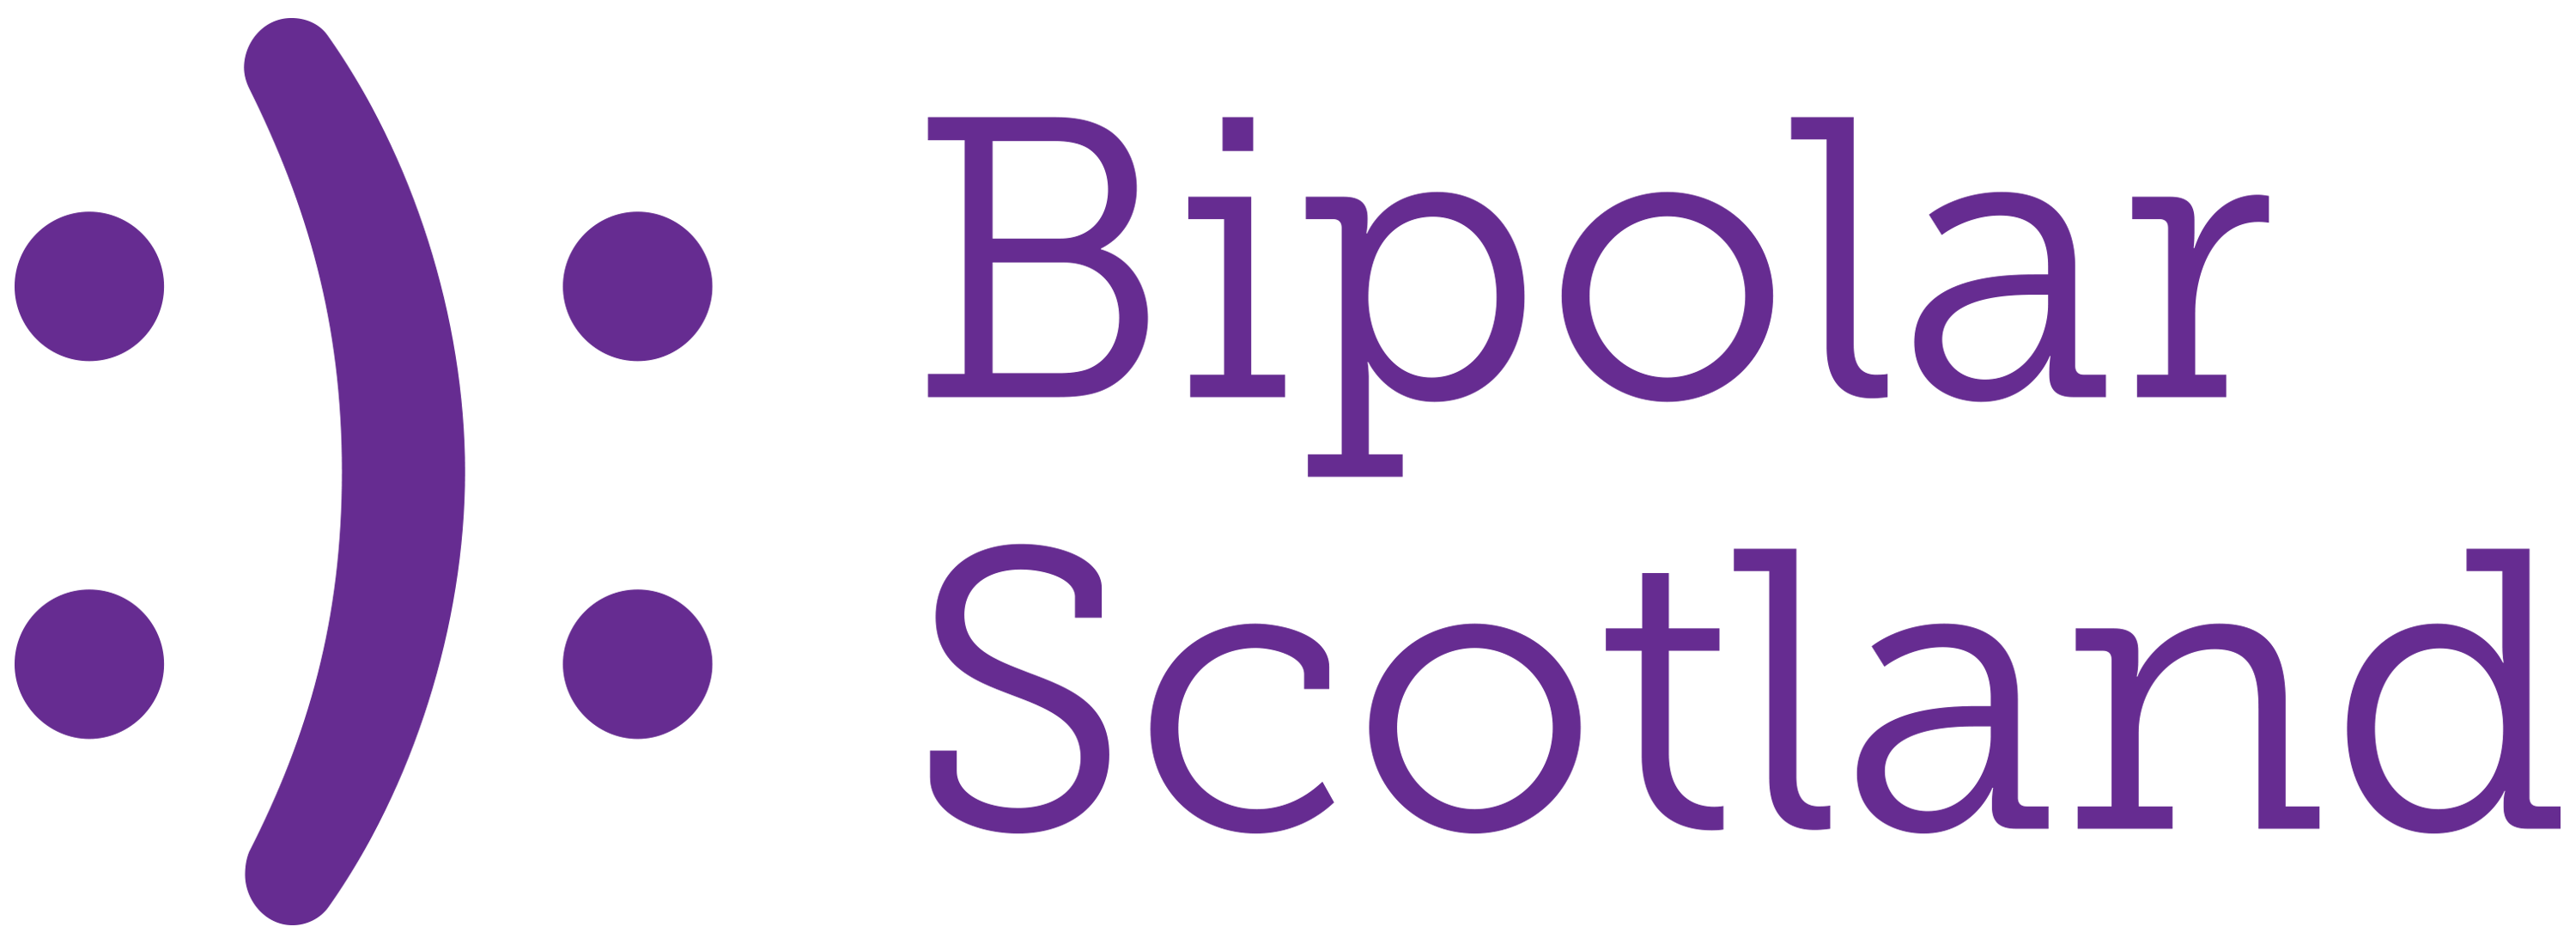 18-30 Bipolar Support Group Logo